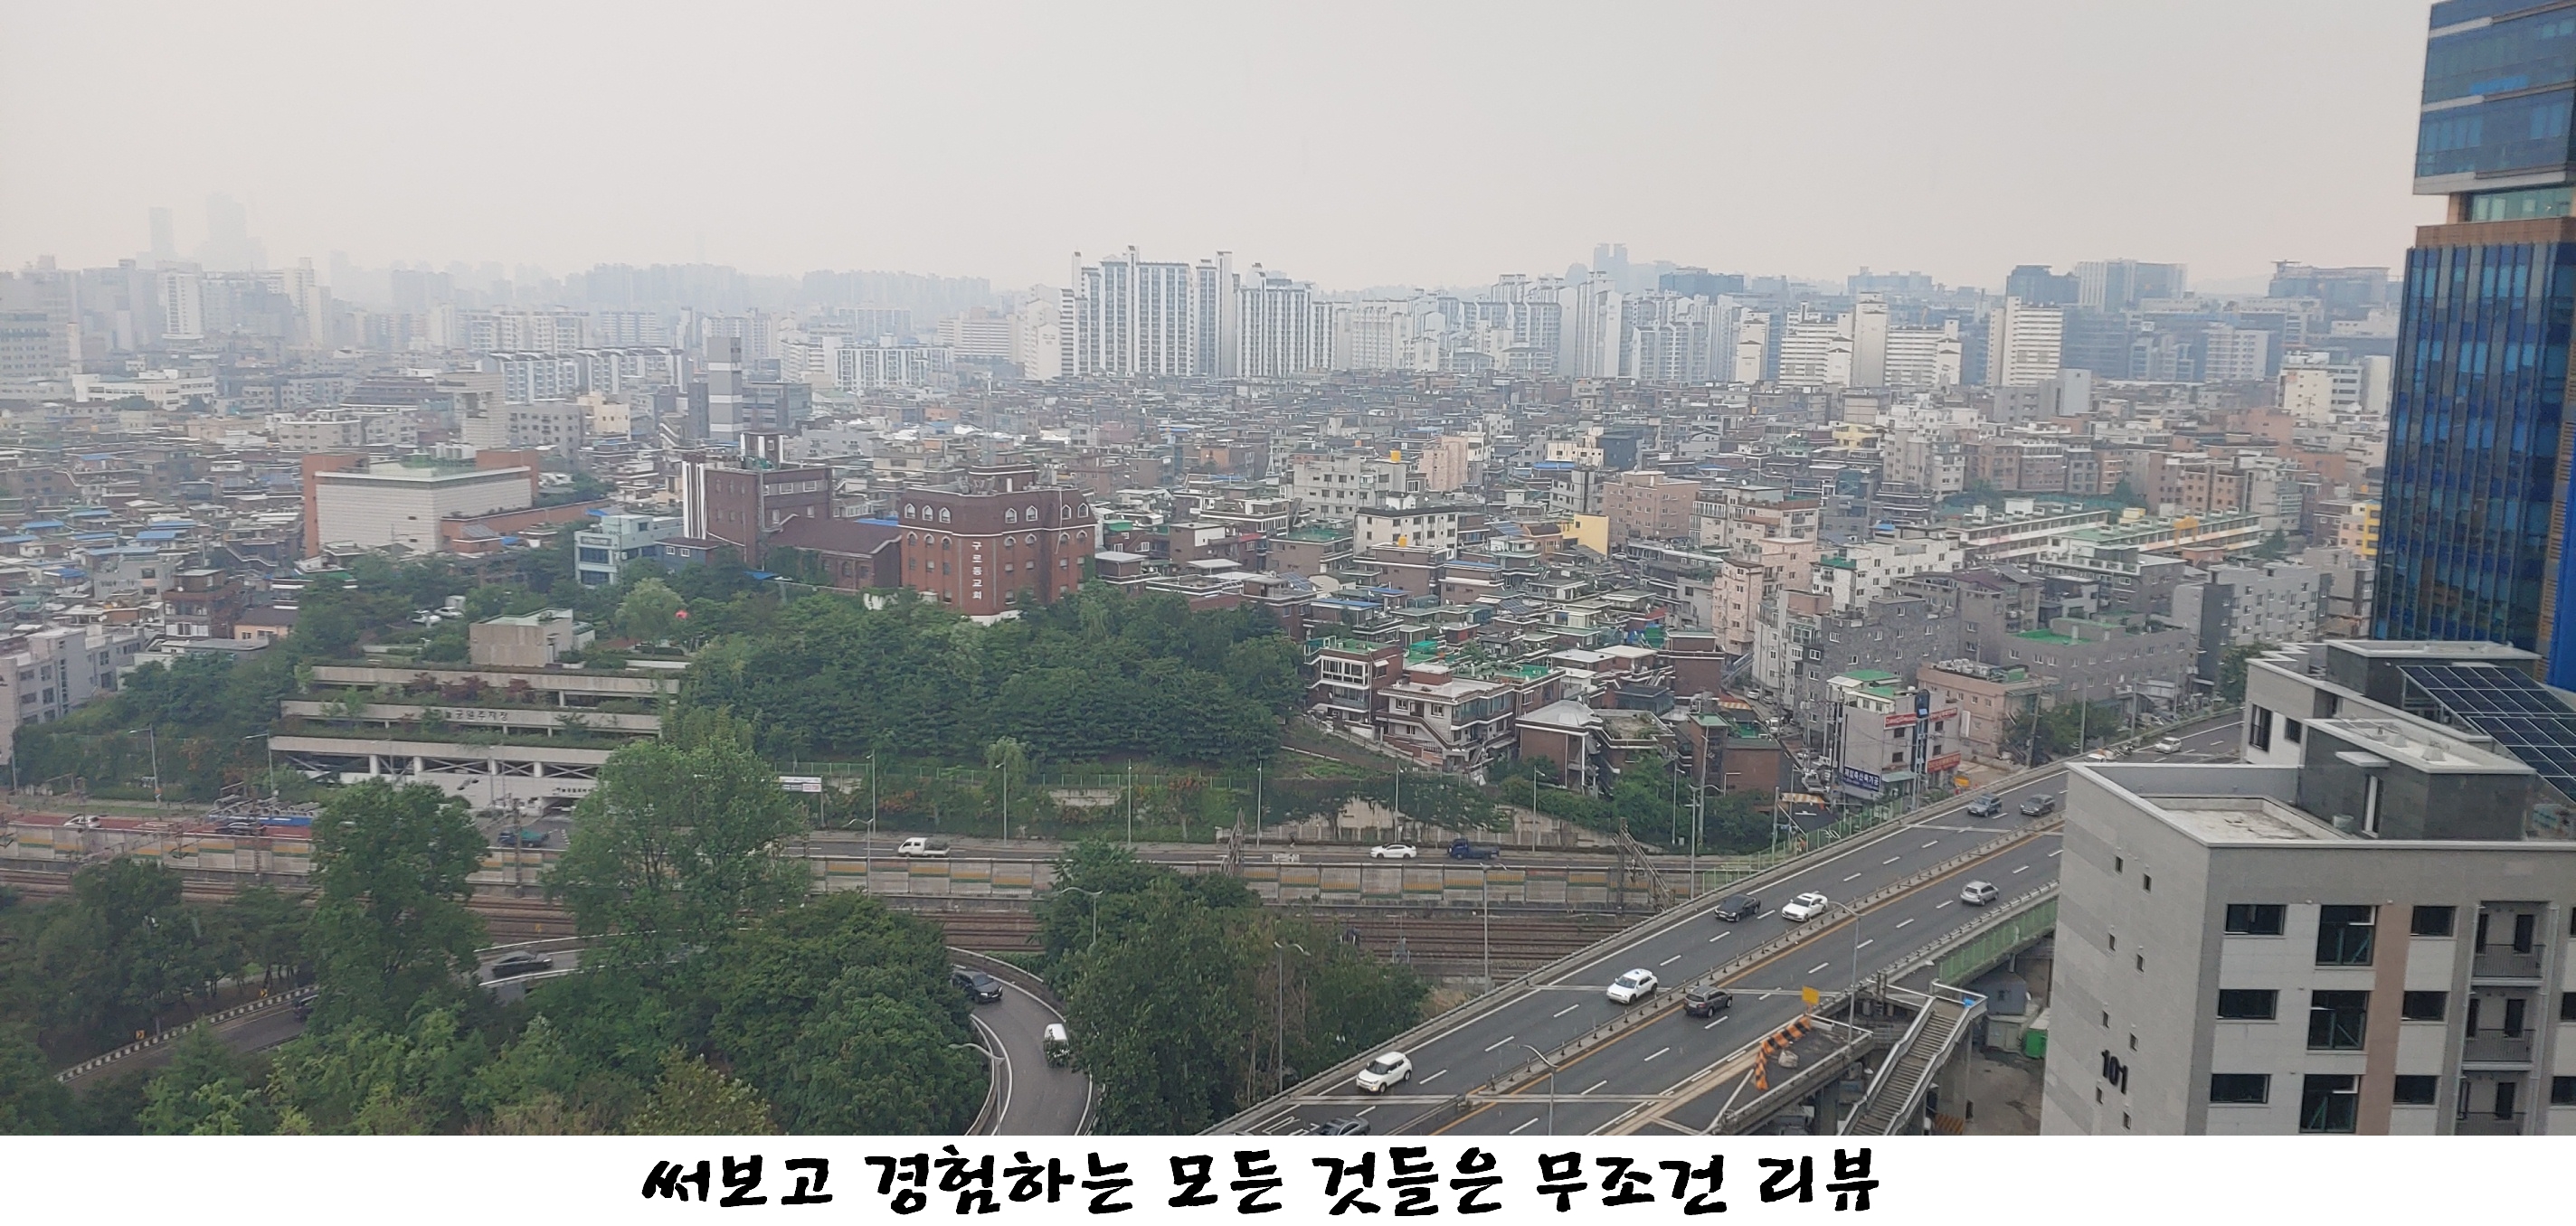 220705&#44; Seoul&#44; 사진&#44; 서울&#44; 풍경&#44; 하늘